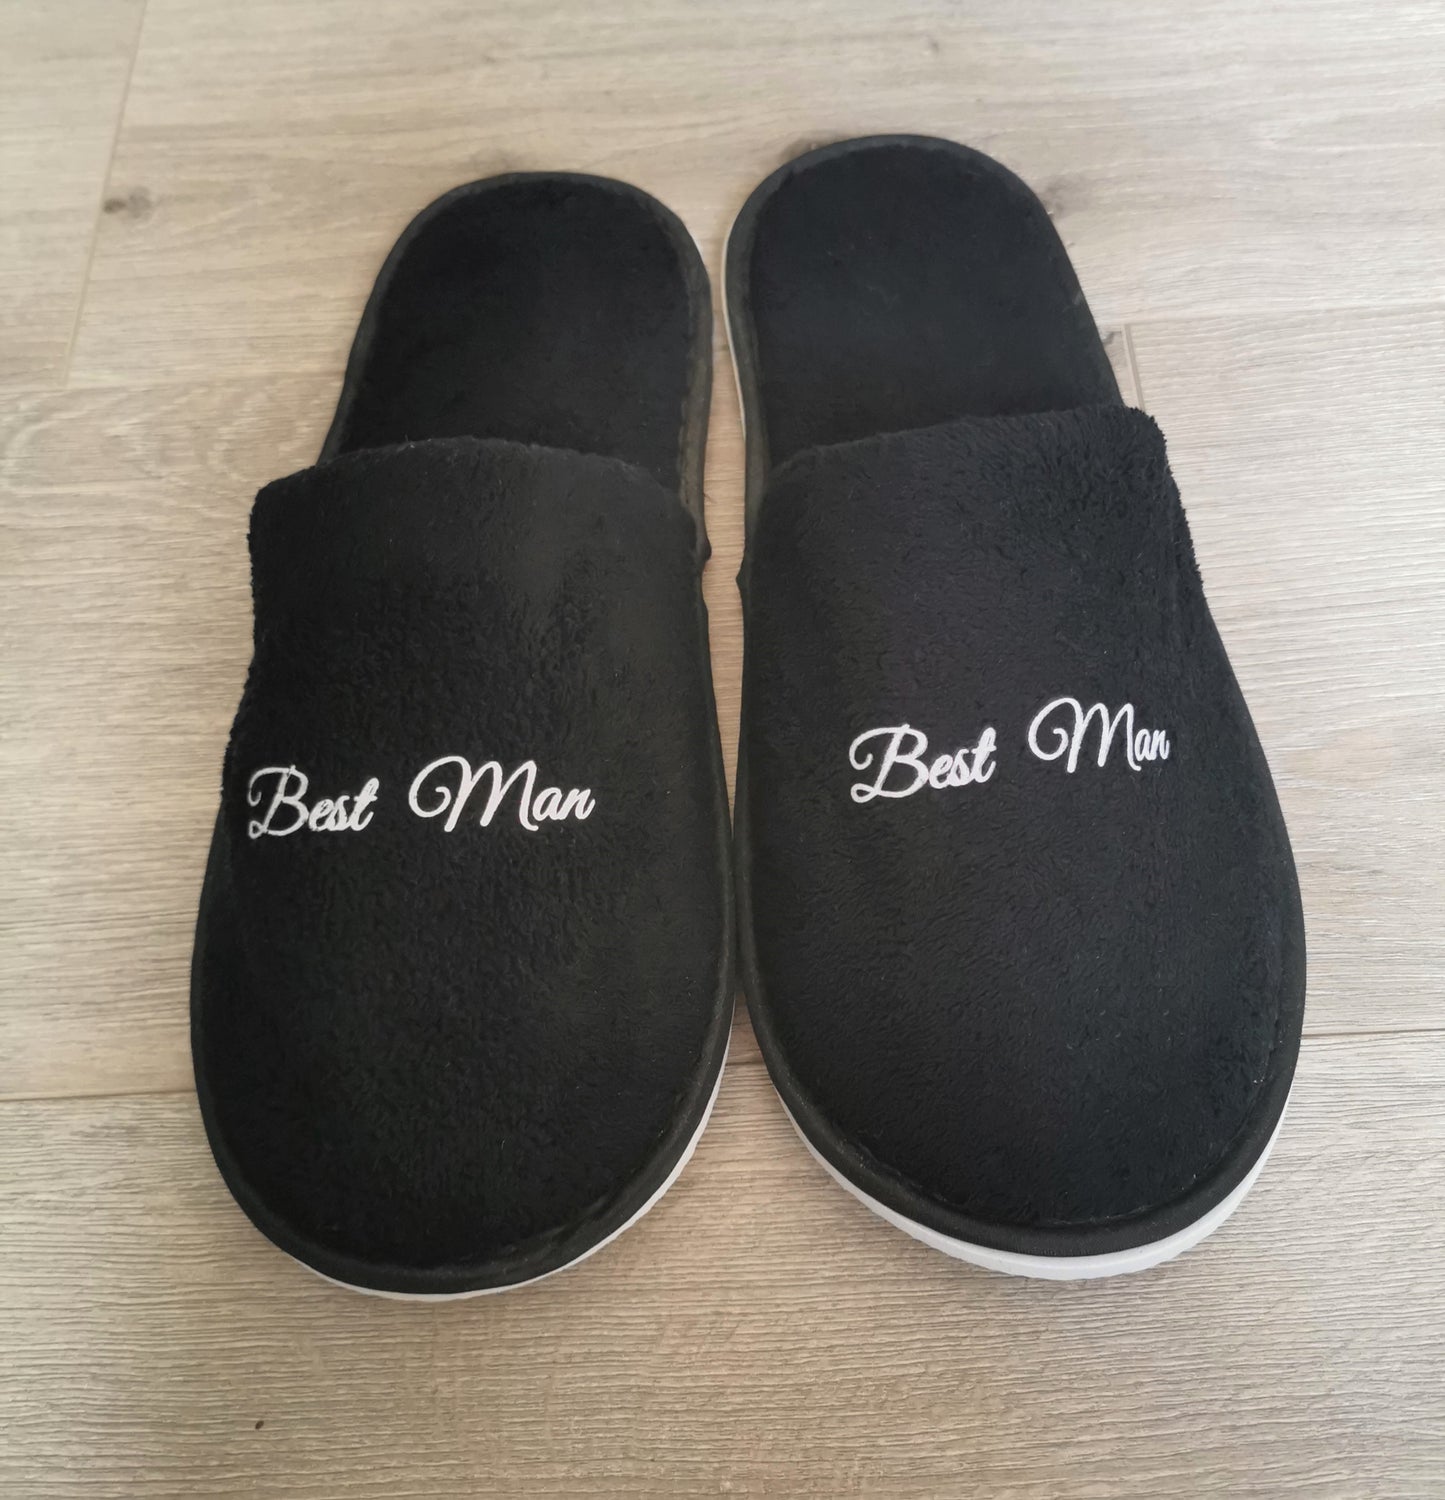 Best Man slippers